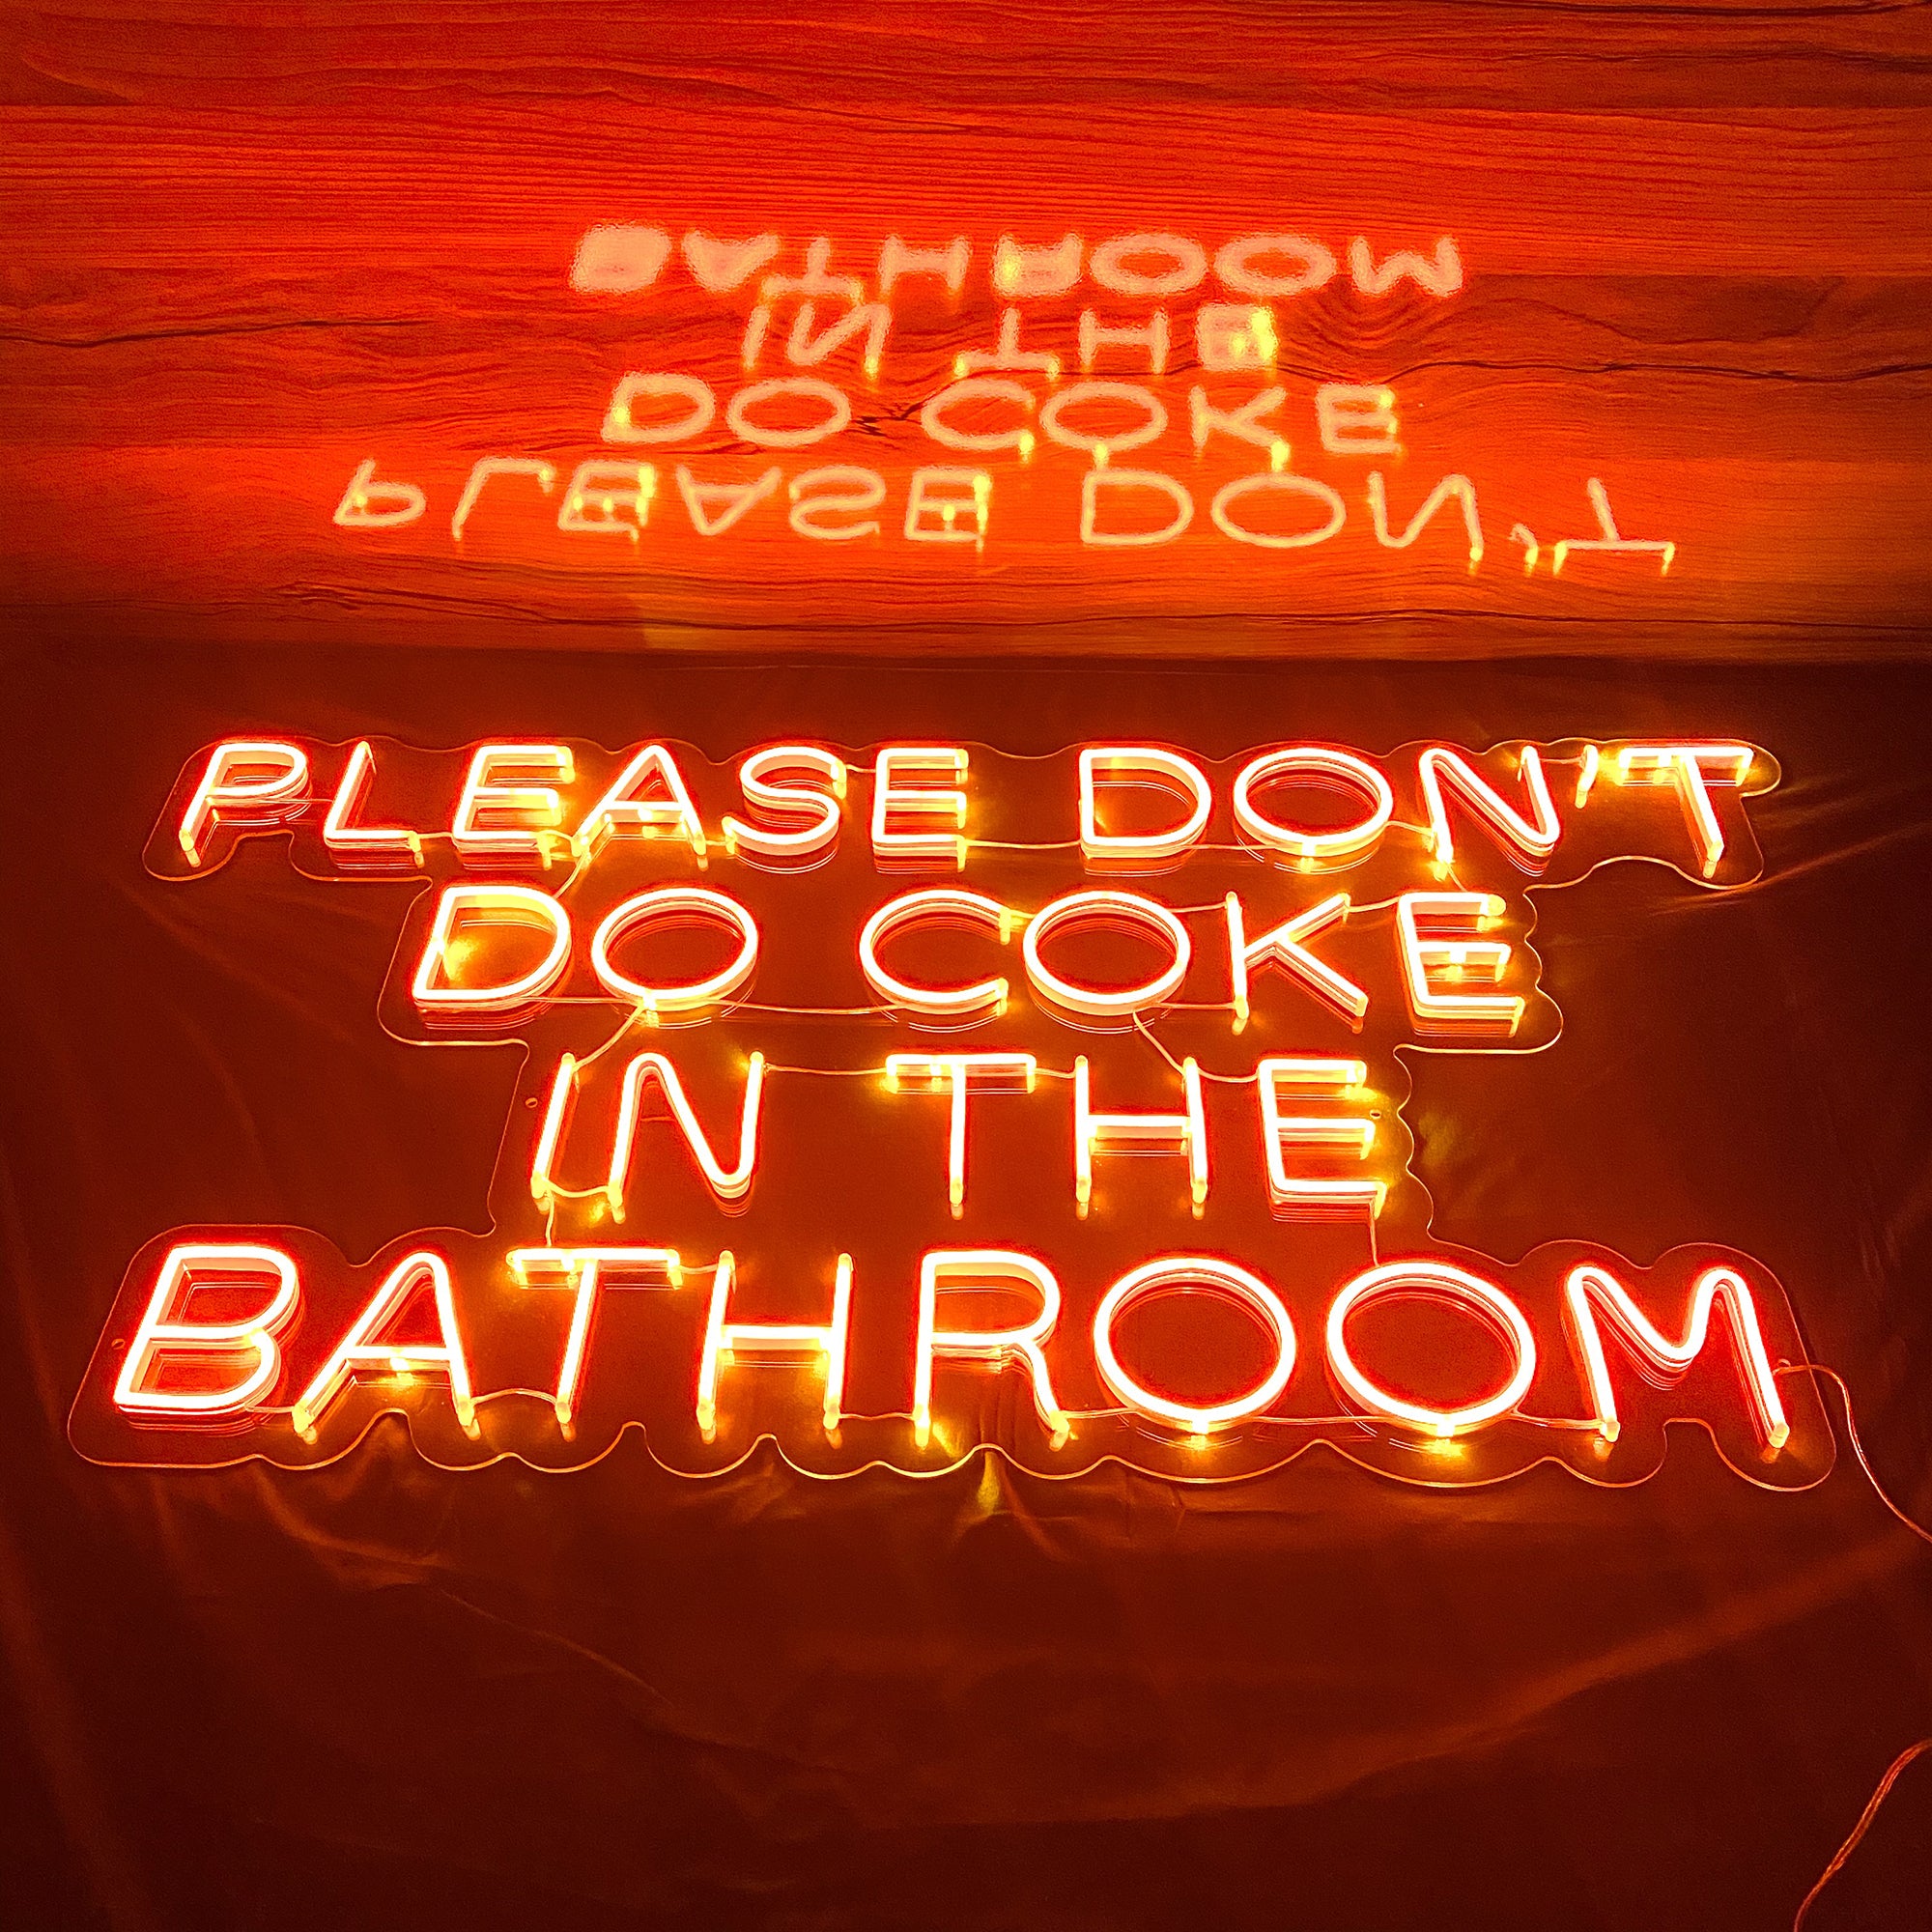 Please don't do coke in the bathroom led neon sign light